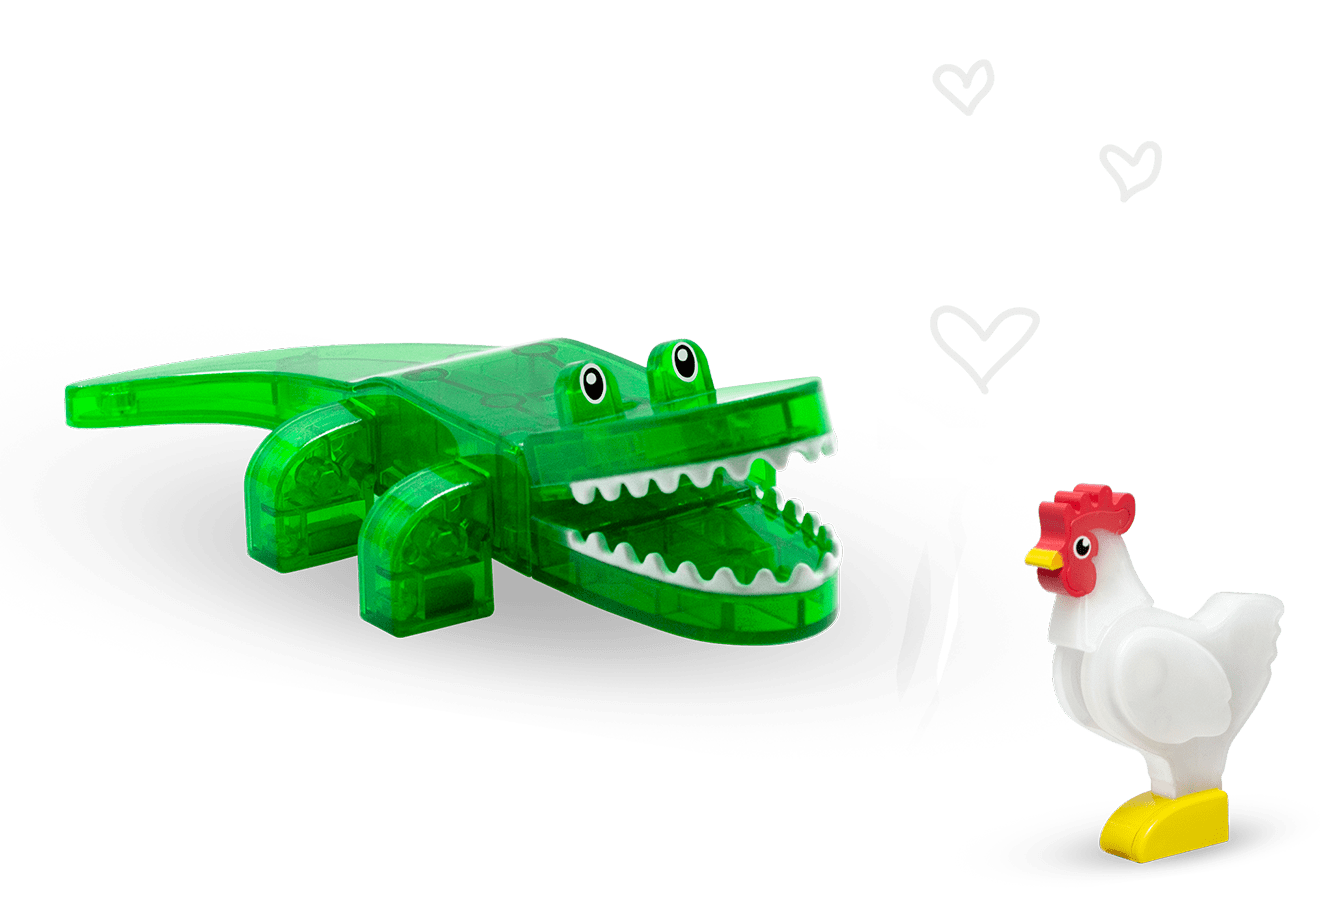 A green Magna-Tiles® caiman figure and a white Magna-Tiles® chicken figure